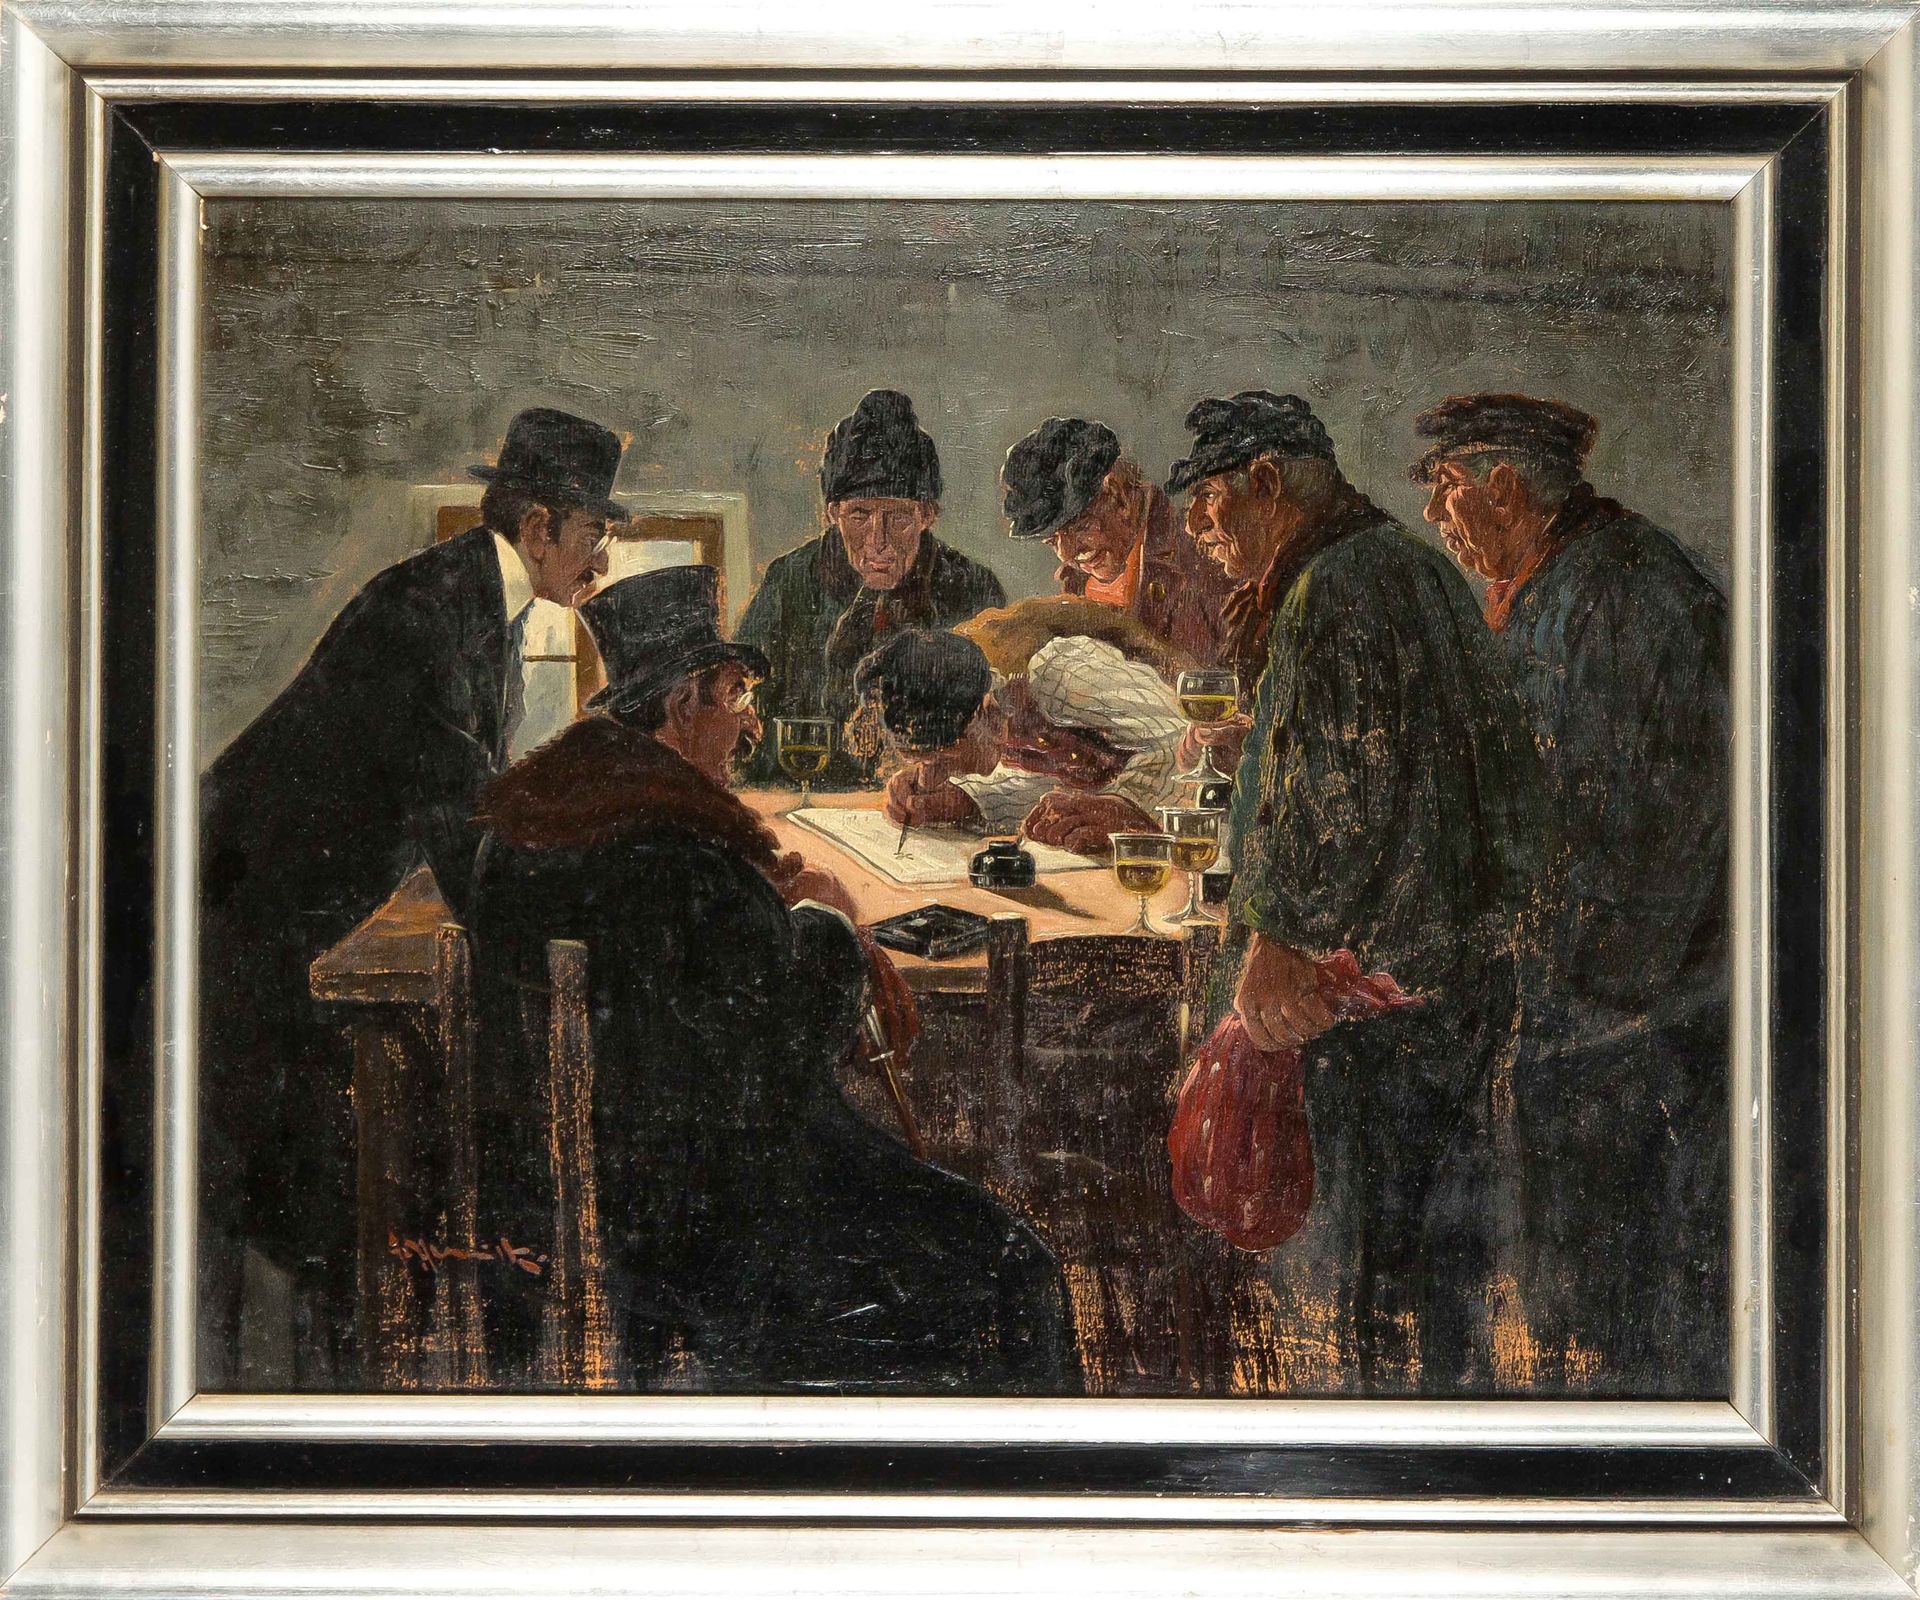 Null 不明身份的画家，约1900年，"在公证处"，一群拿着酒杯的工人正对着两位衣着优雅的先生，而其中一位工人正准备写一封信。夹板上的油画，左下角有模糊的签名&hellip;